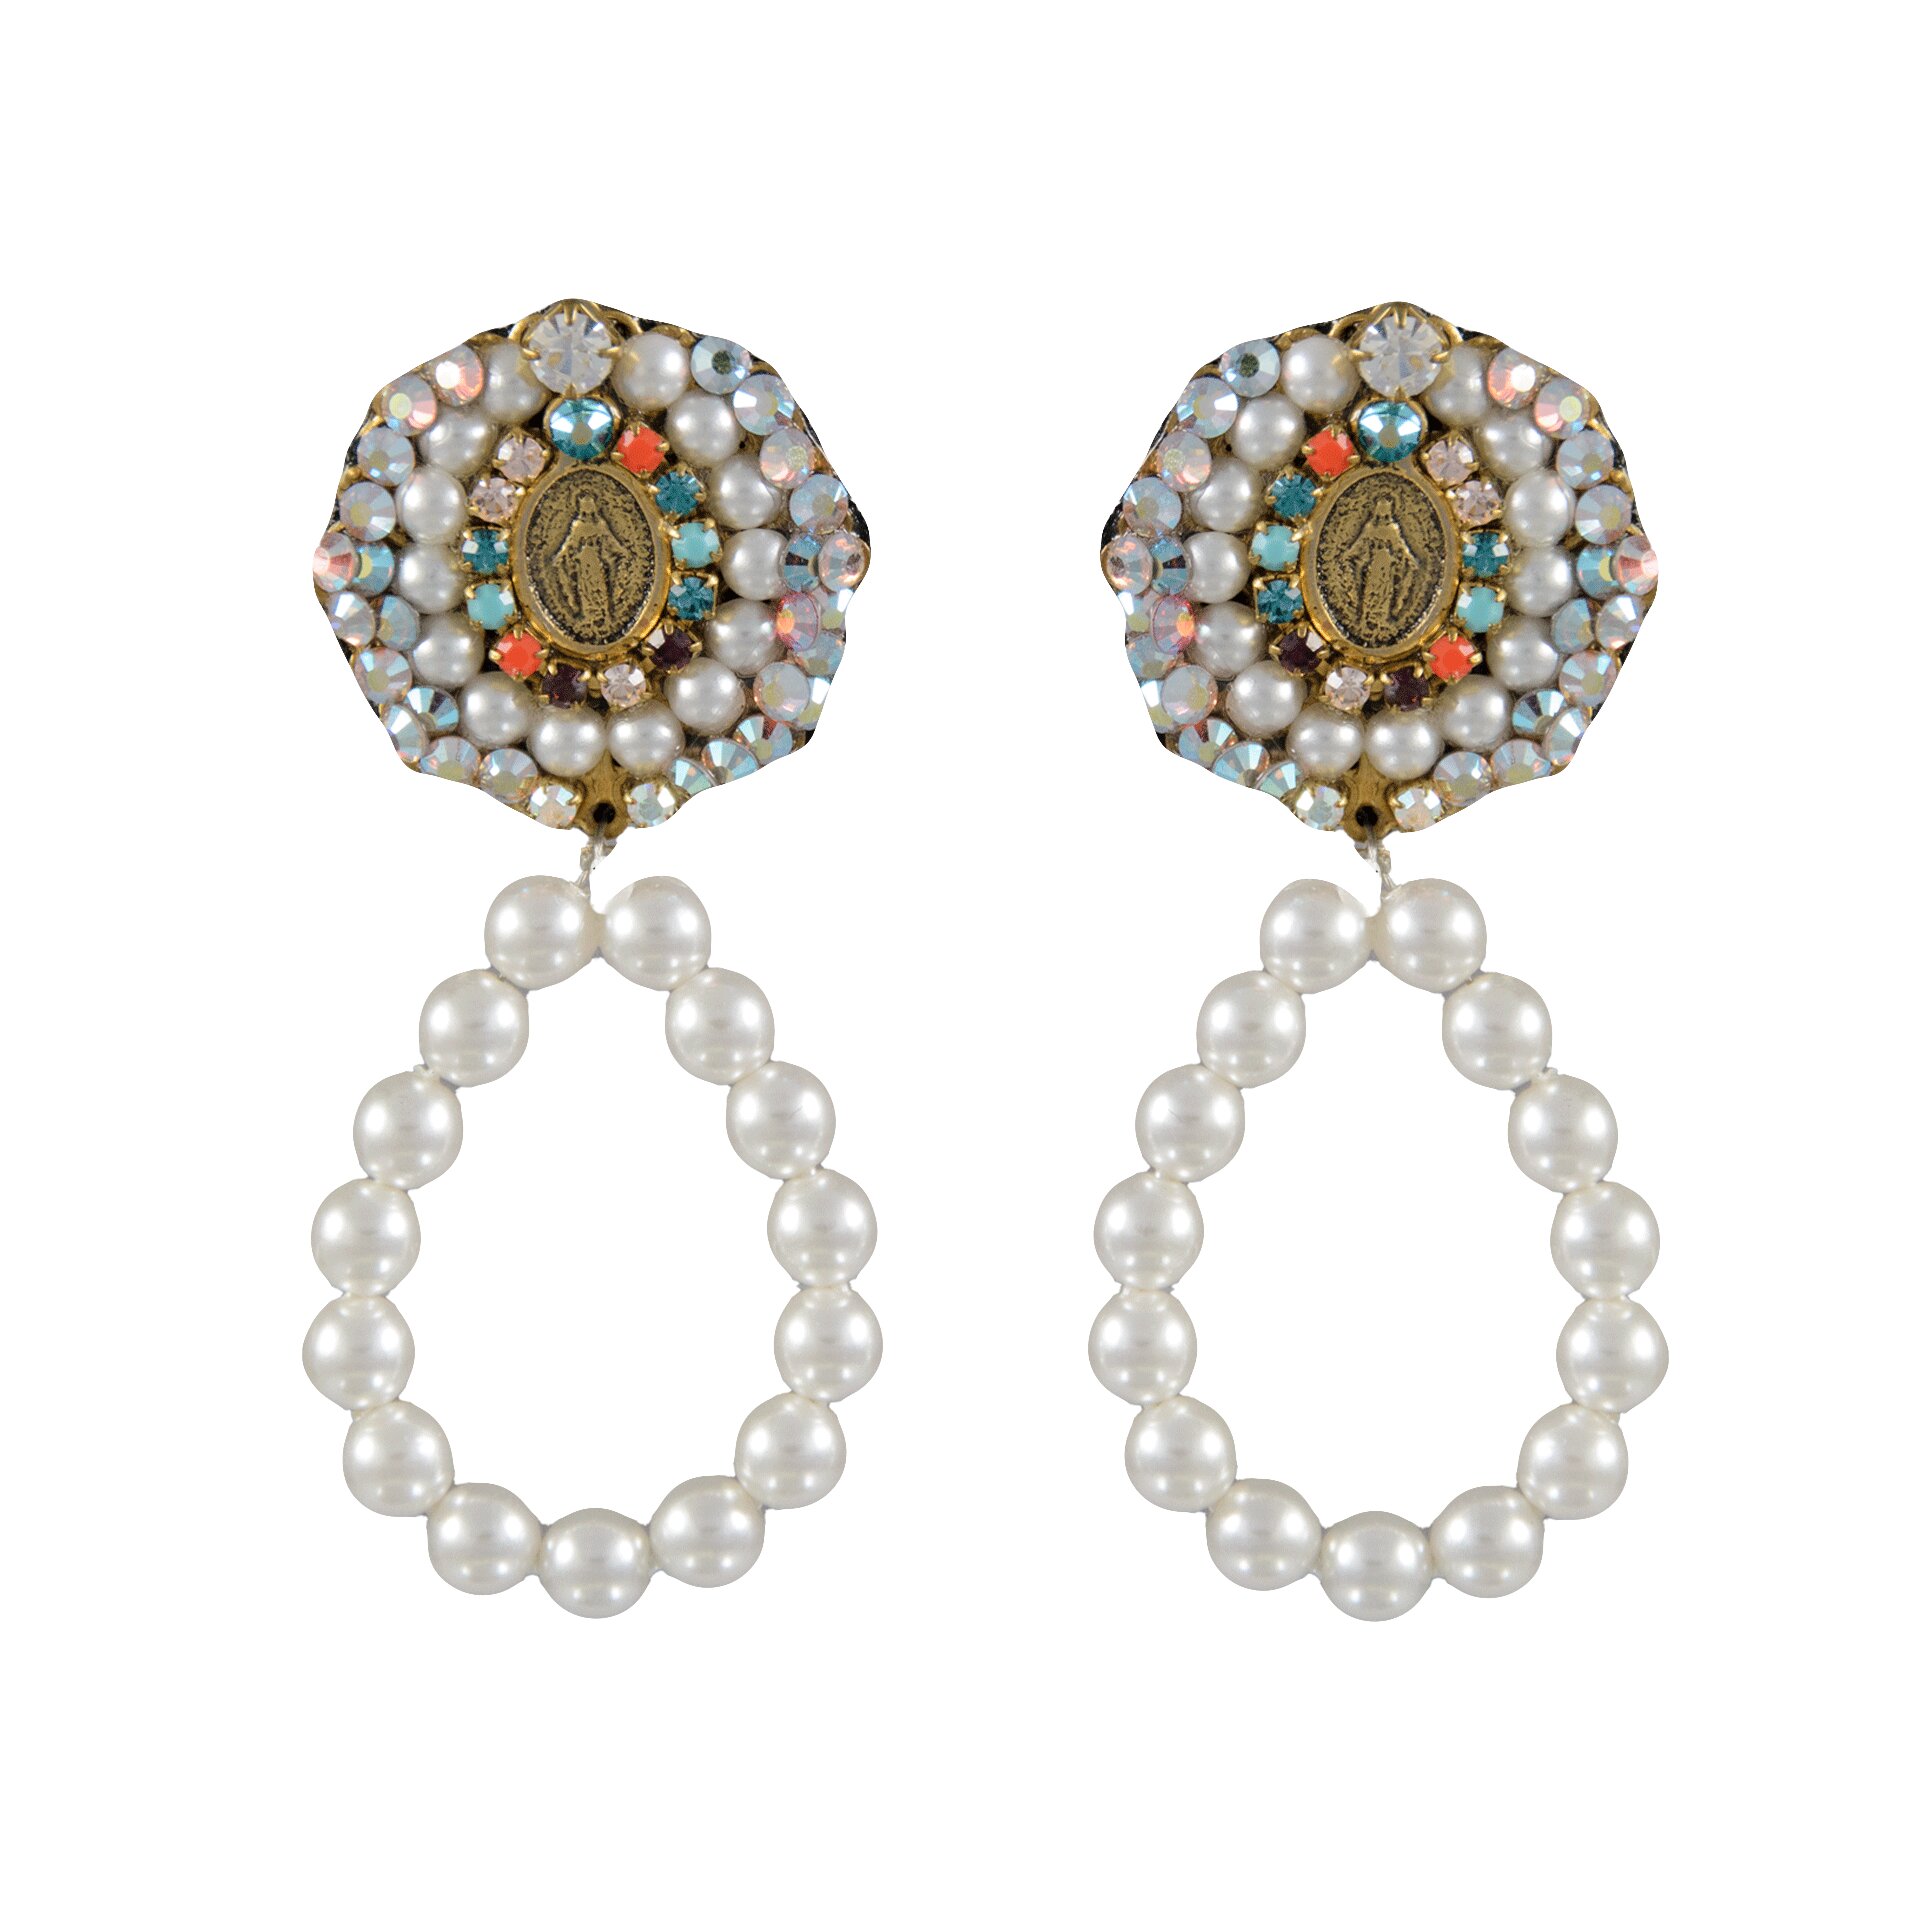 LINDA'S DREAM wedding white earrings with pearls